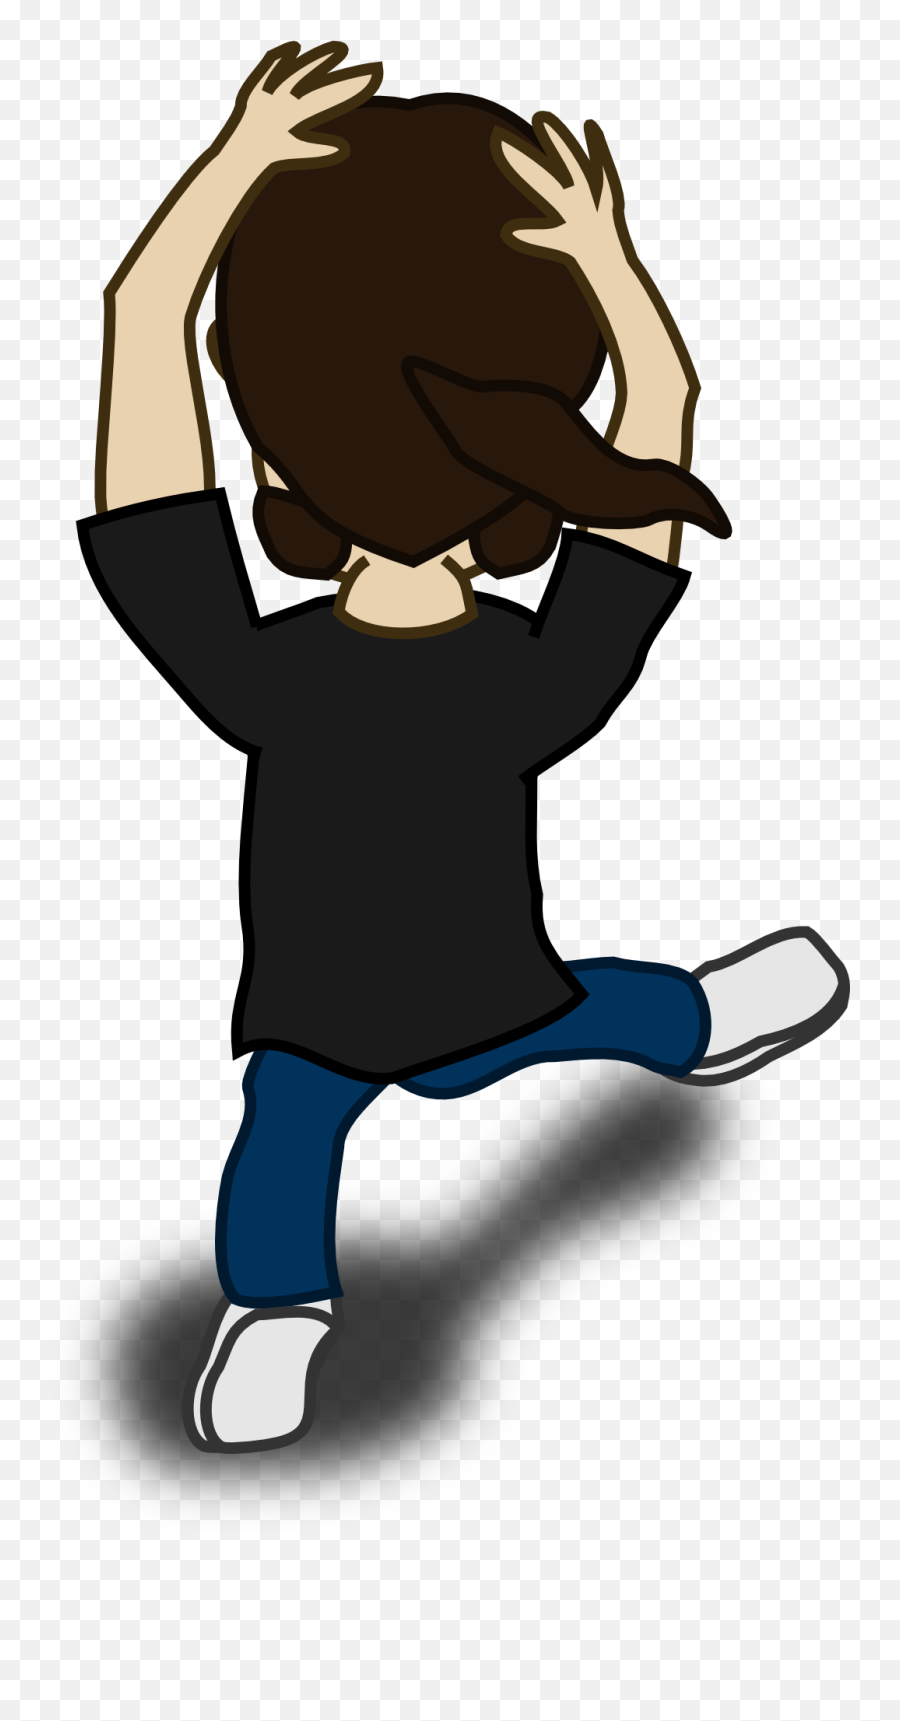 Drawn Dancing Man With A Rattail Haircut Free Image Download Emoji,Man Dance Emoji